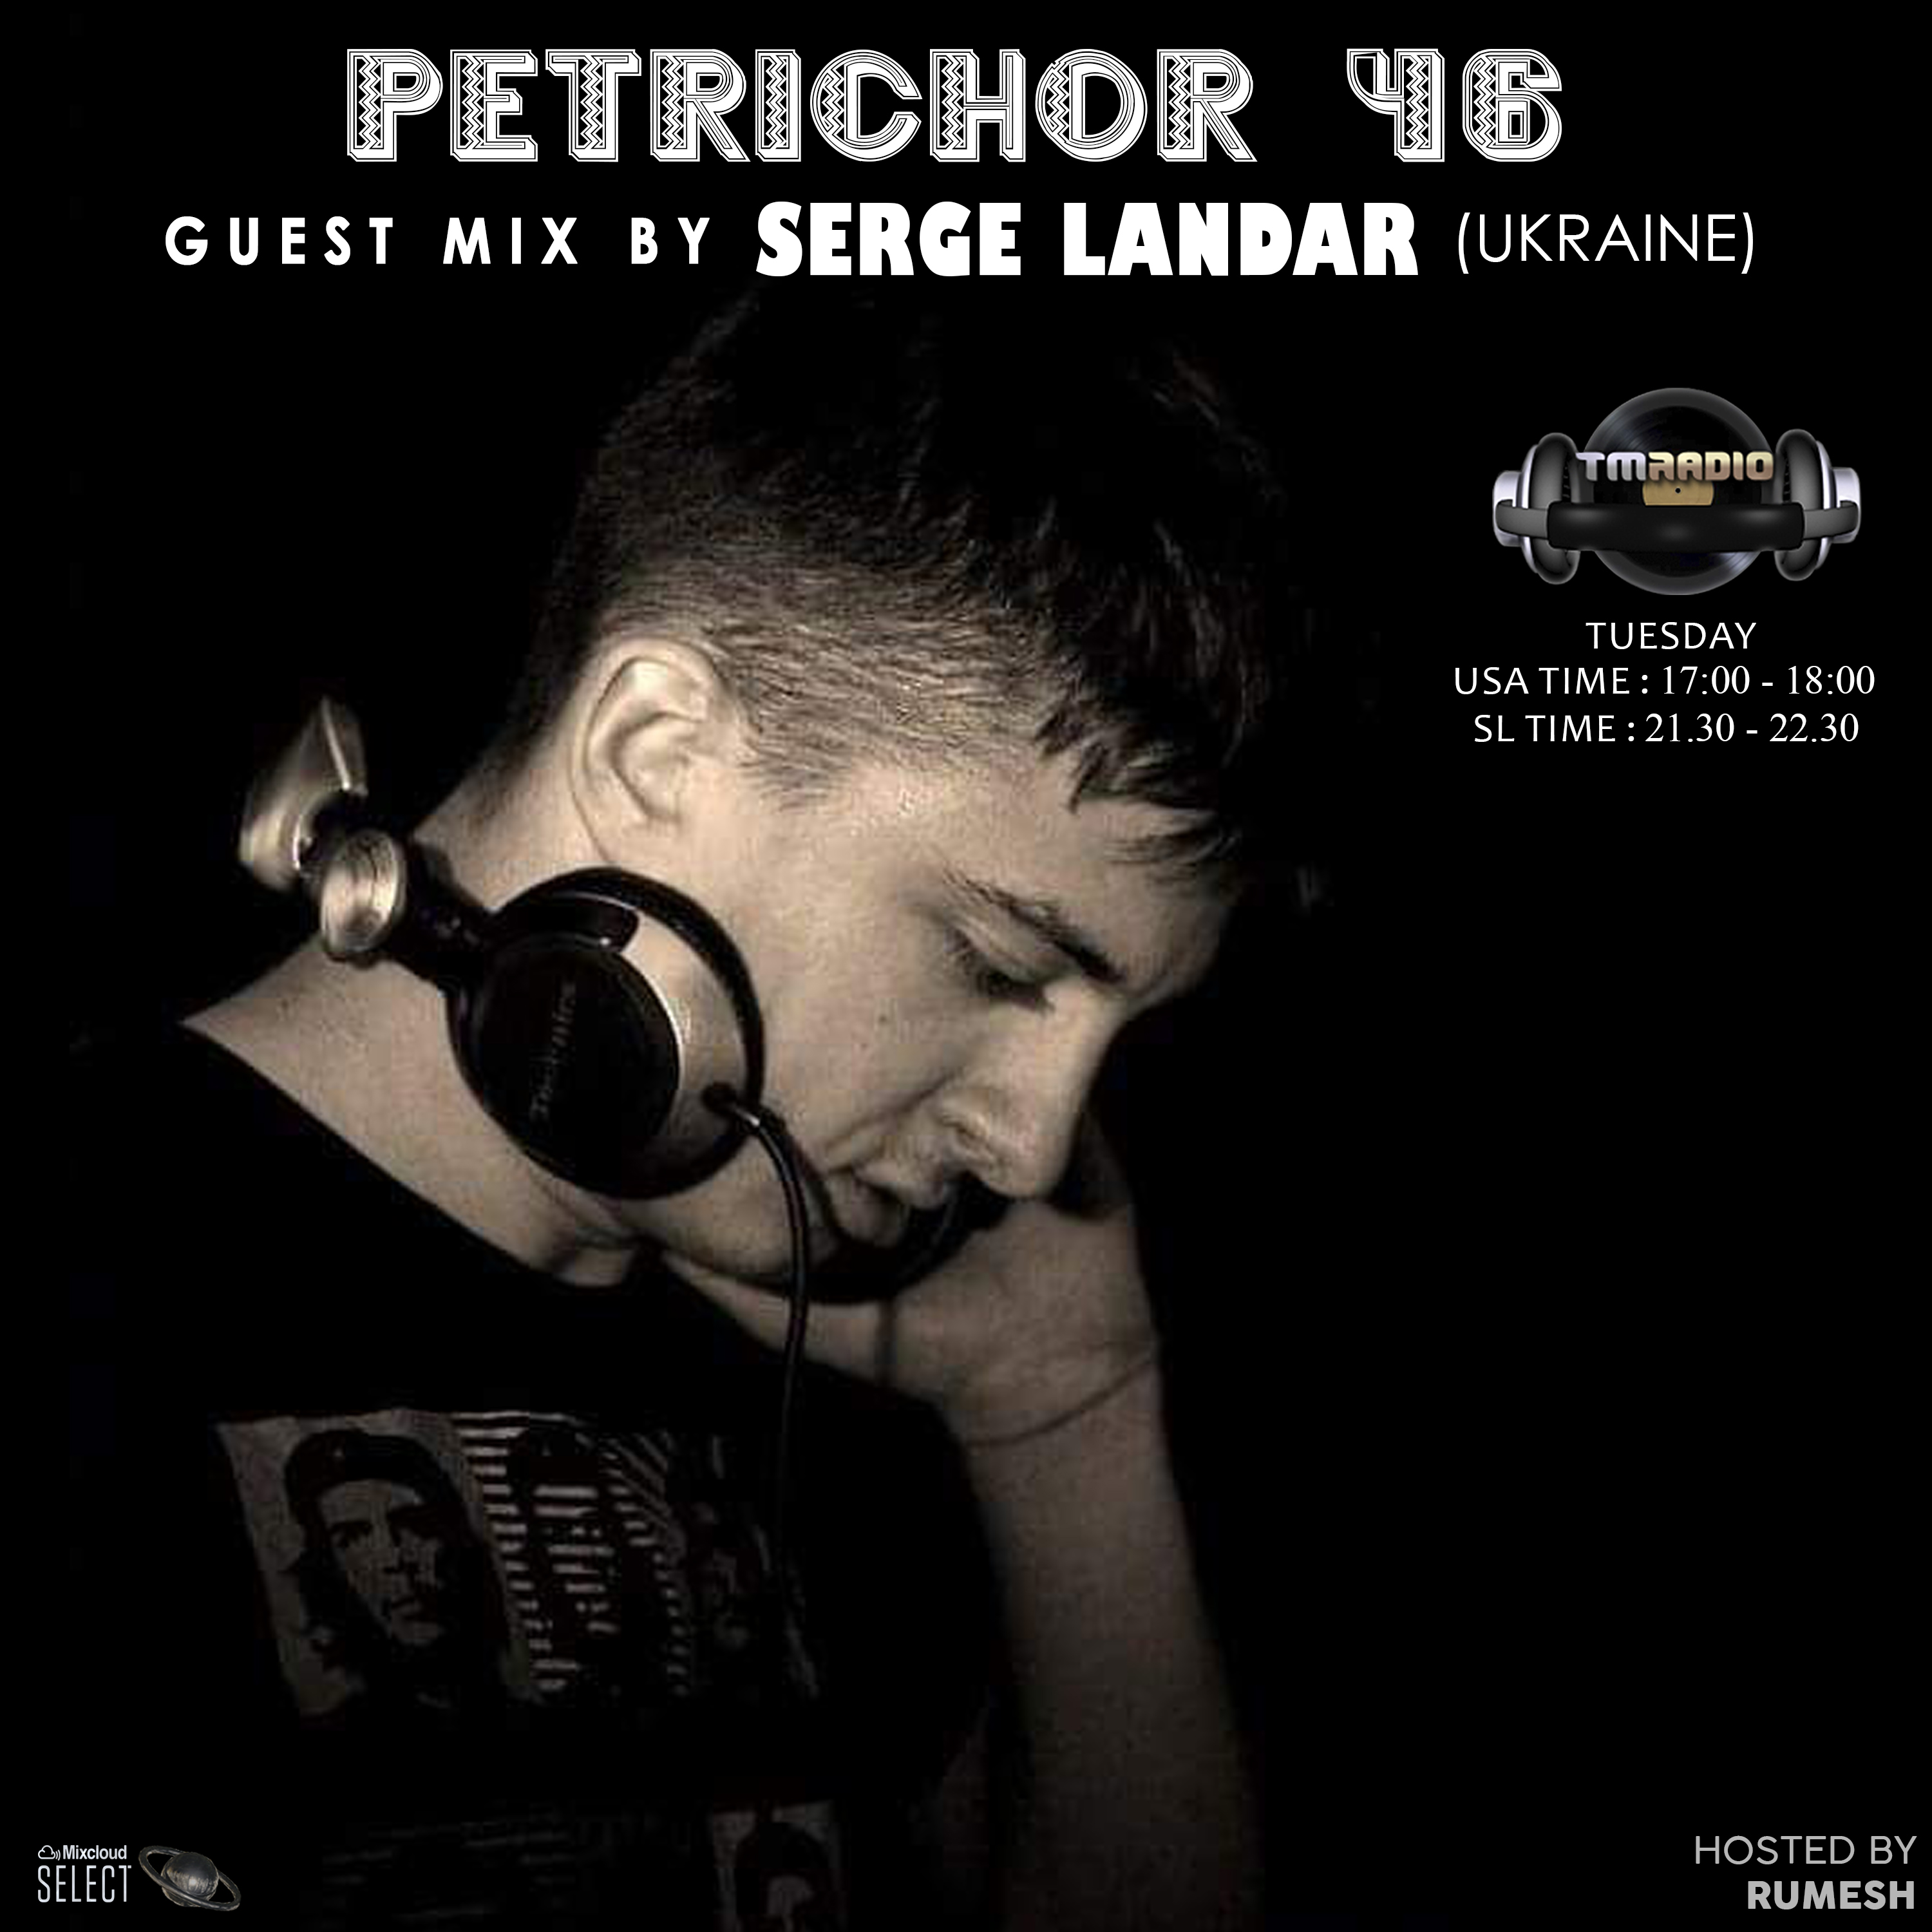 Petrichor 46 guest mix by Serge Landar (Ukraine) (from September 24th, 2019)